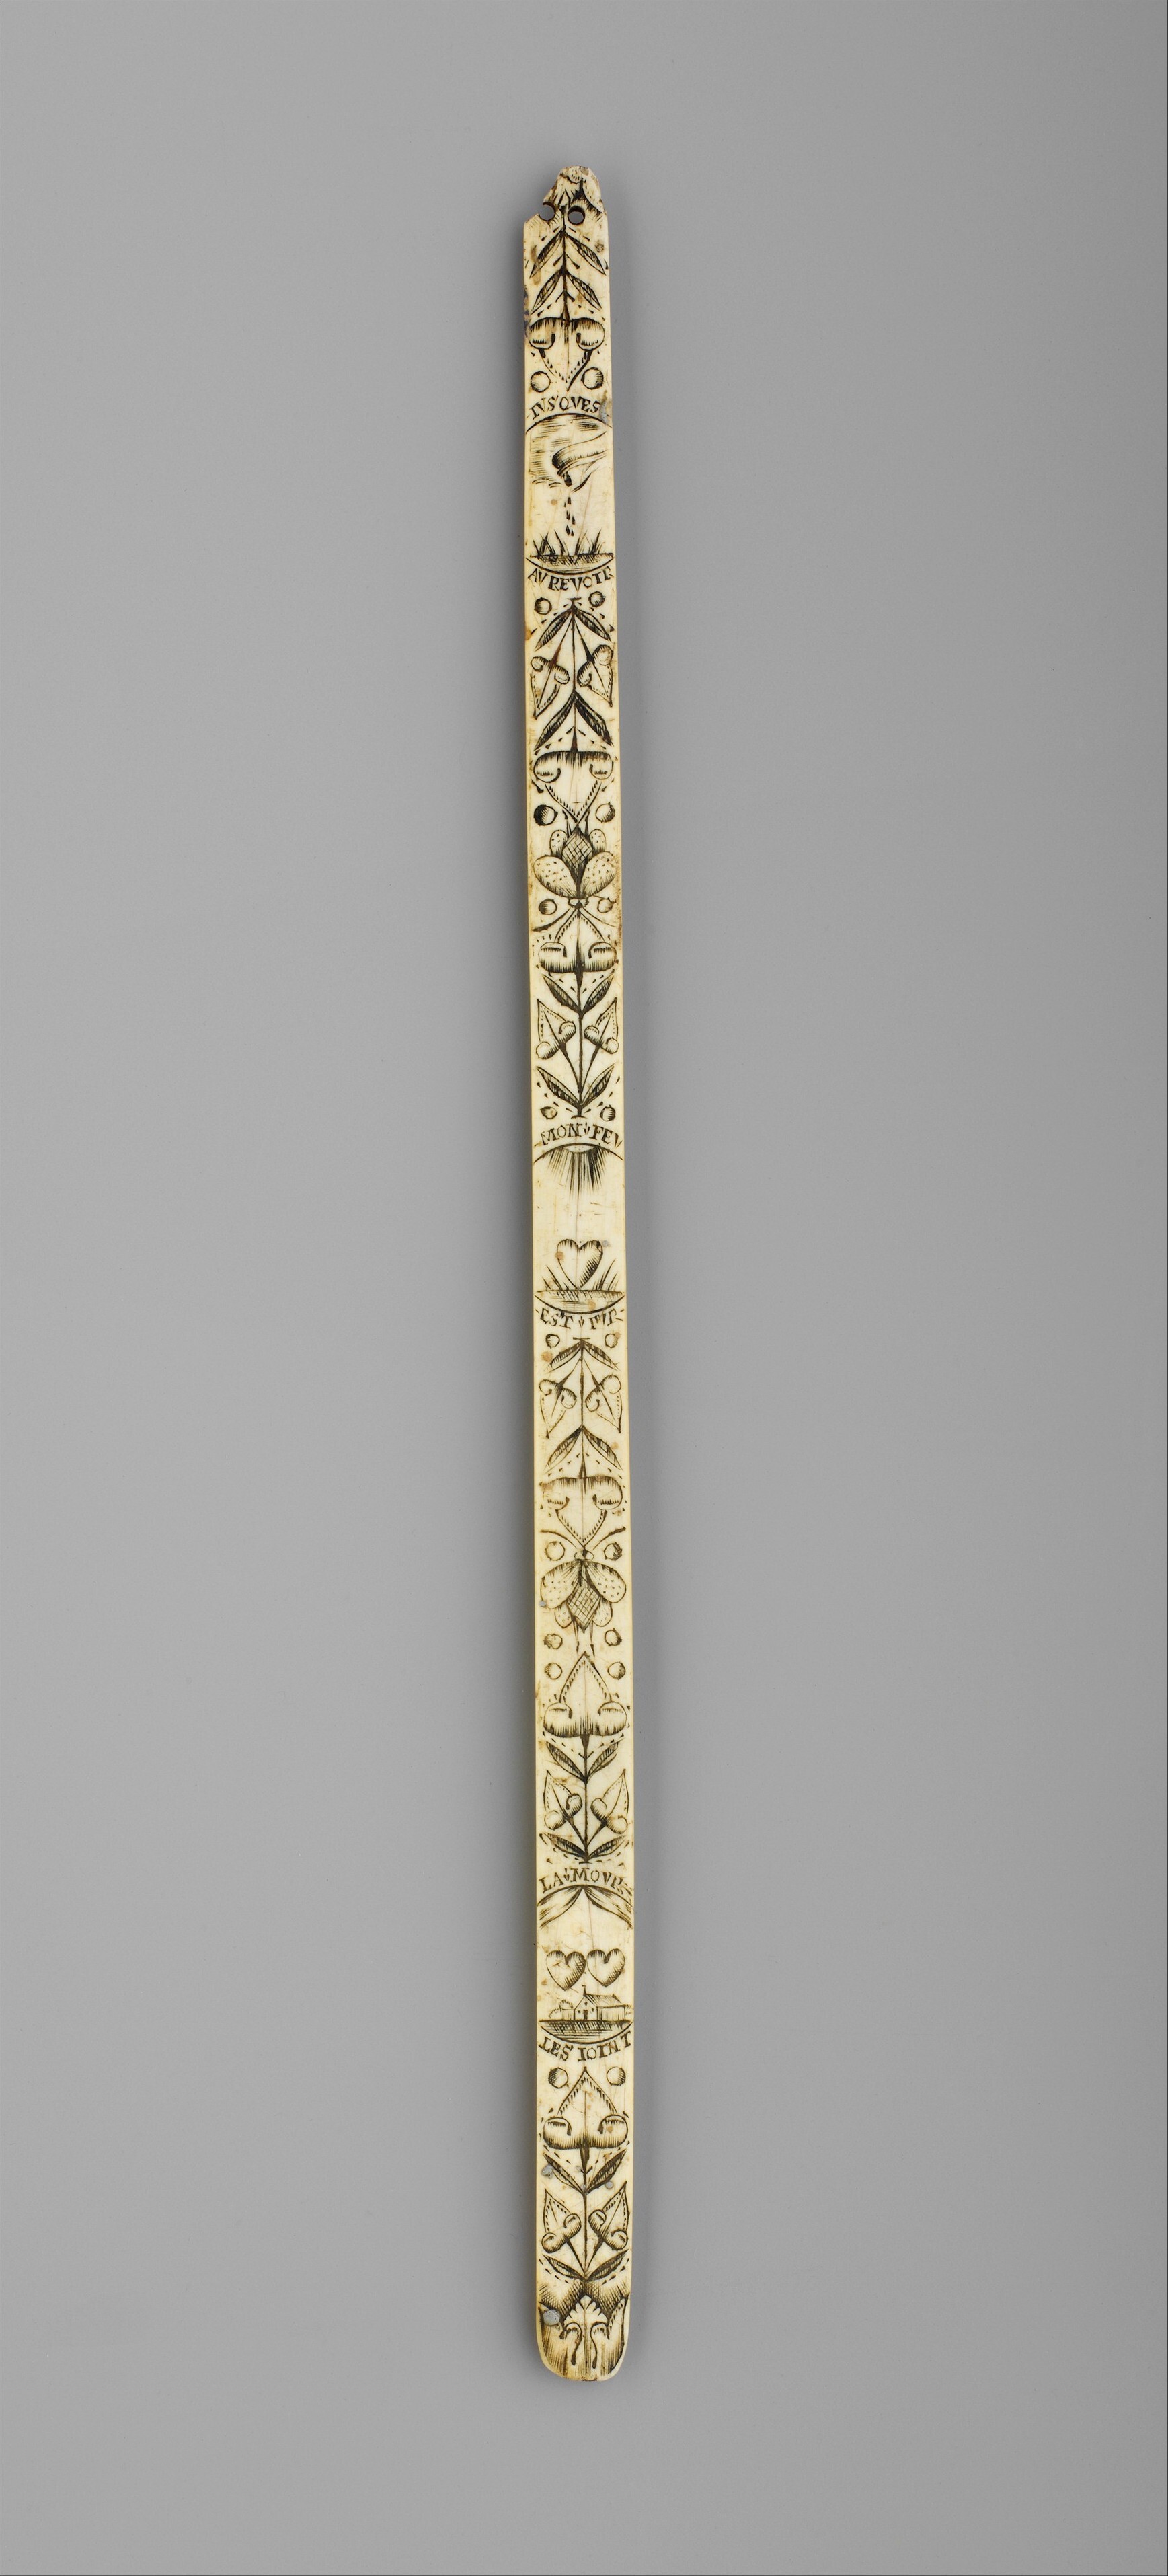   Ivory busks, French (back), 17th century, Metropolitan Museum of Art New York, 30.135.20 